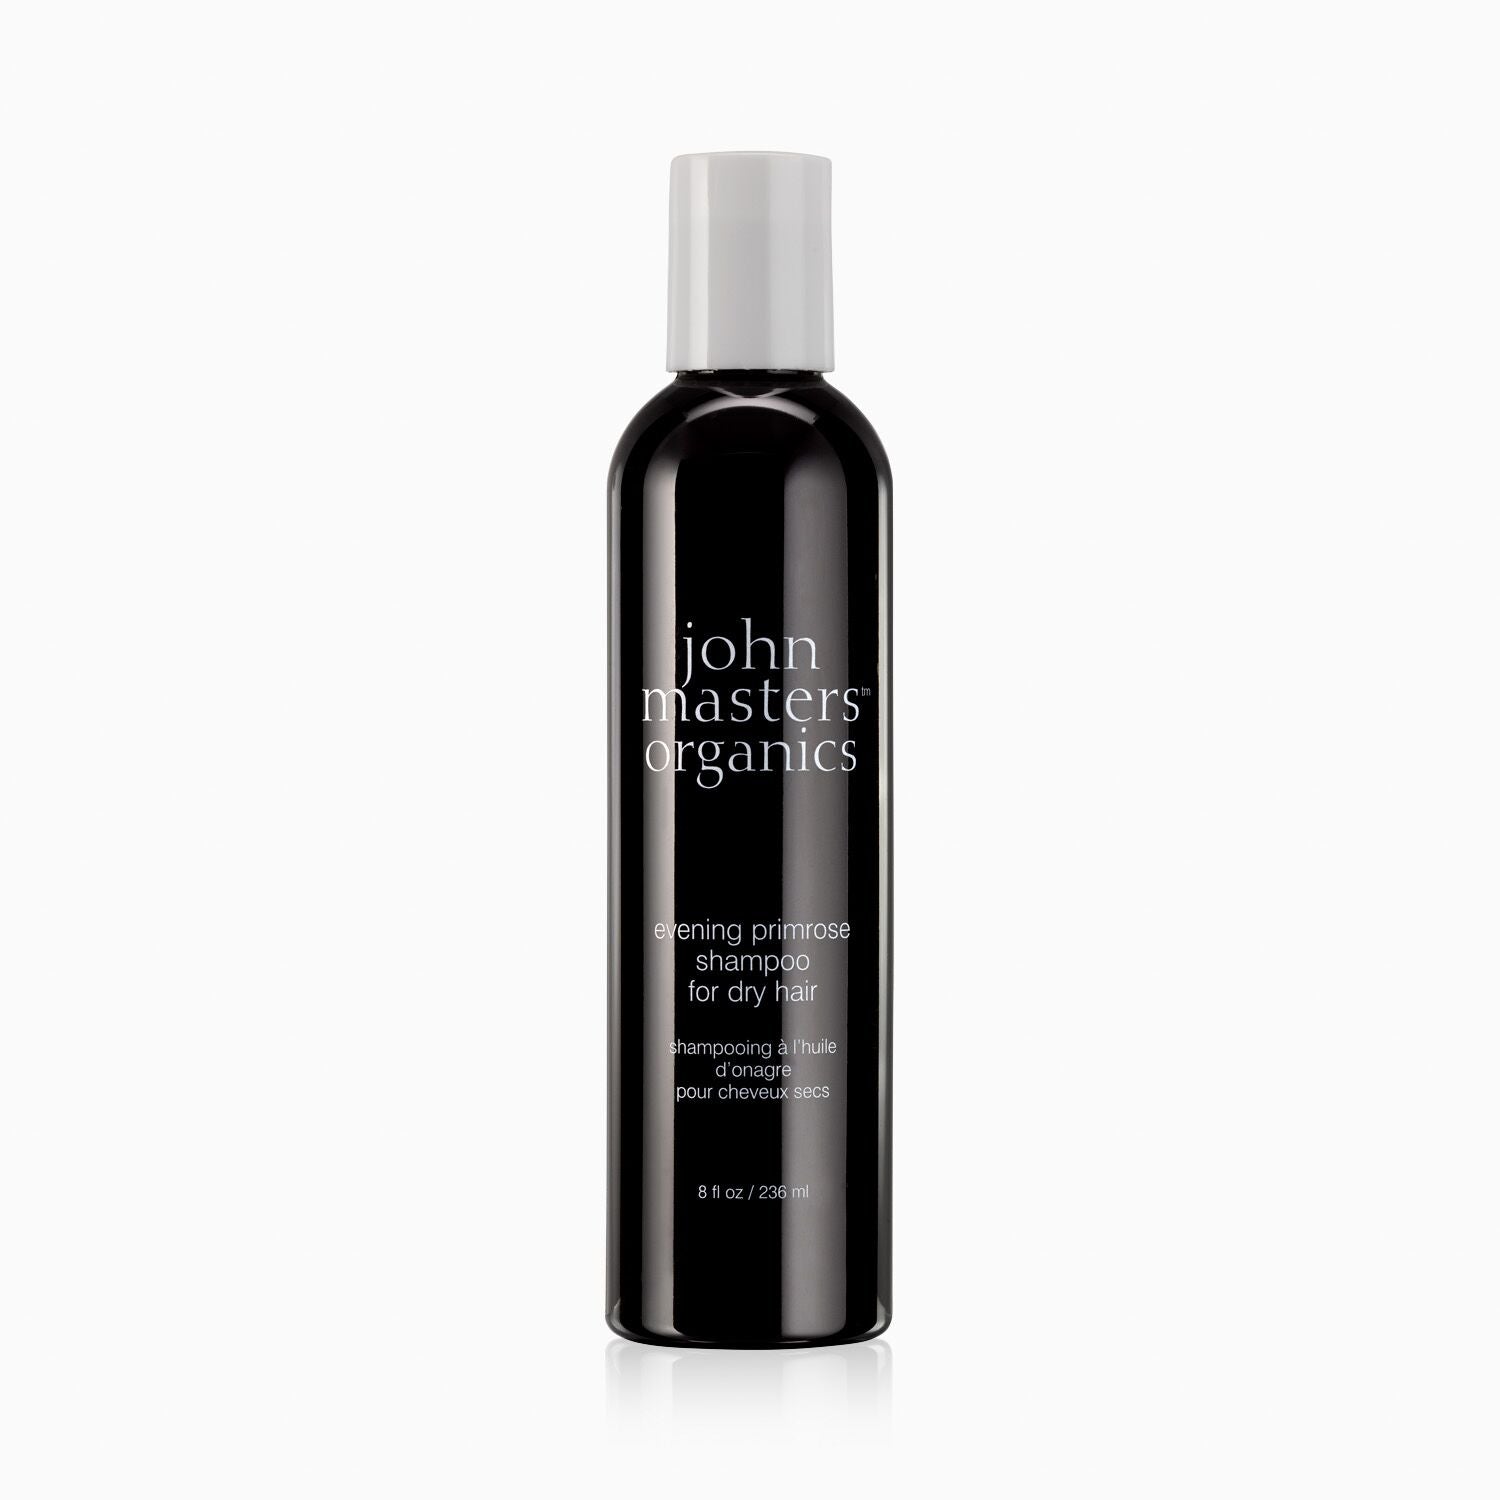 john masters organics - Evening Primrose Shampoo